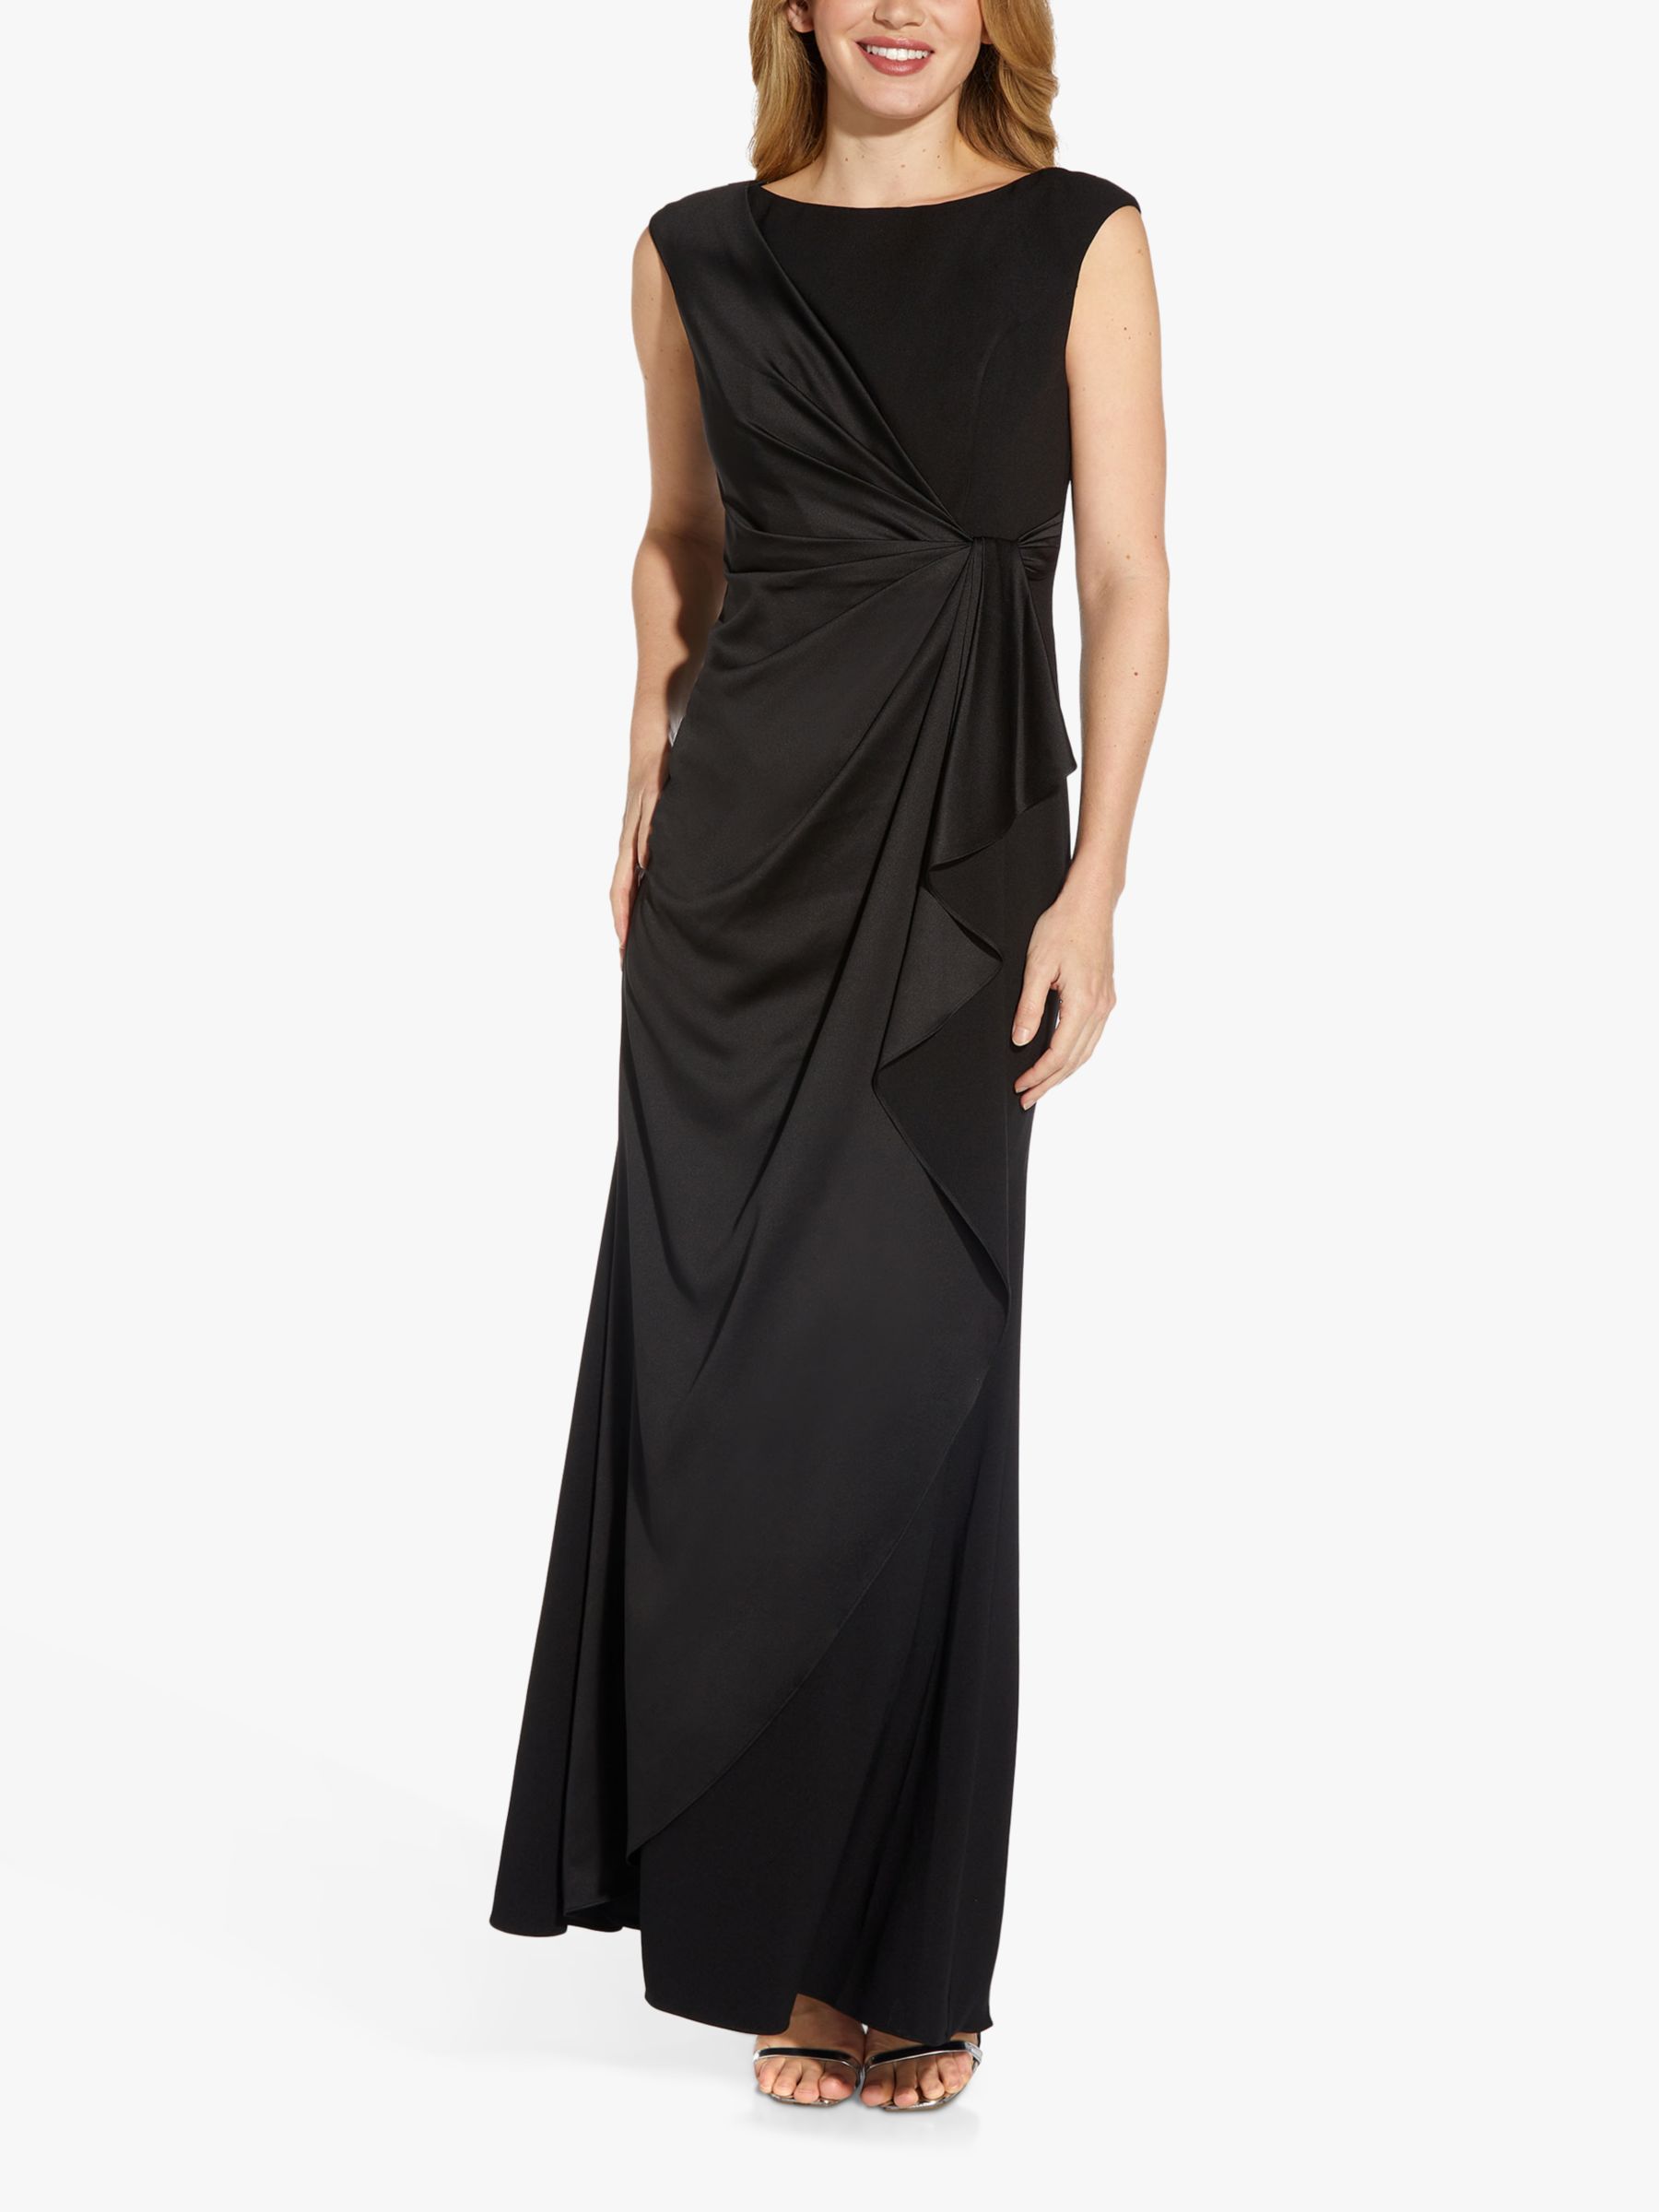 Adrianna Papell Satin Grepe Maxi Dress, Black at John Lewis & Partners